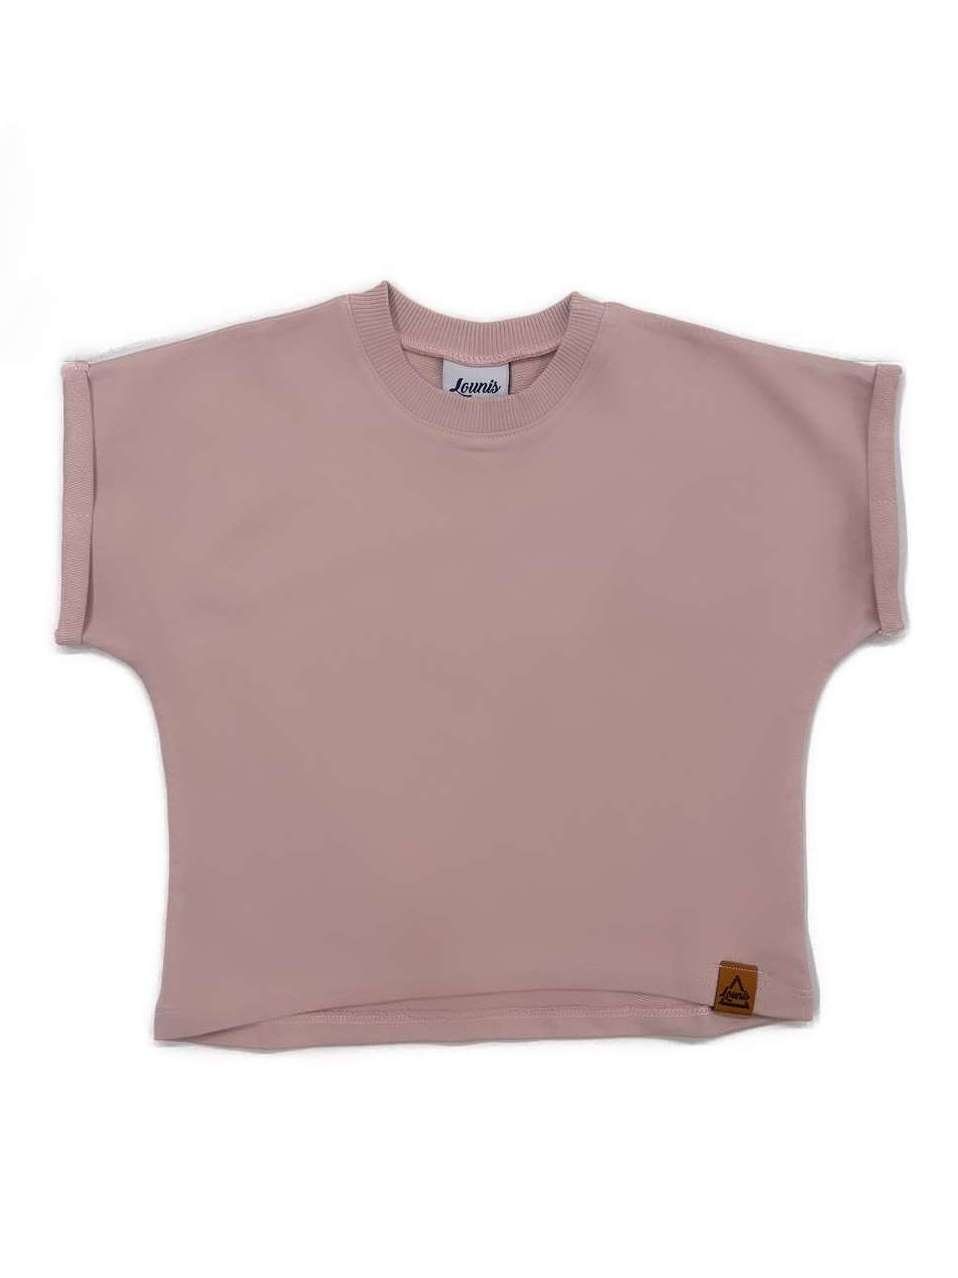 Lounis Oversize-Shirt - T-Shirt - Kindershirt - Babys & Kleinkinder aus Baumwolle Altrosa